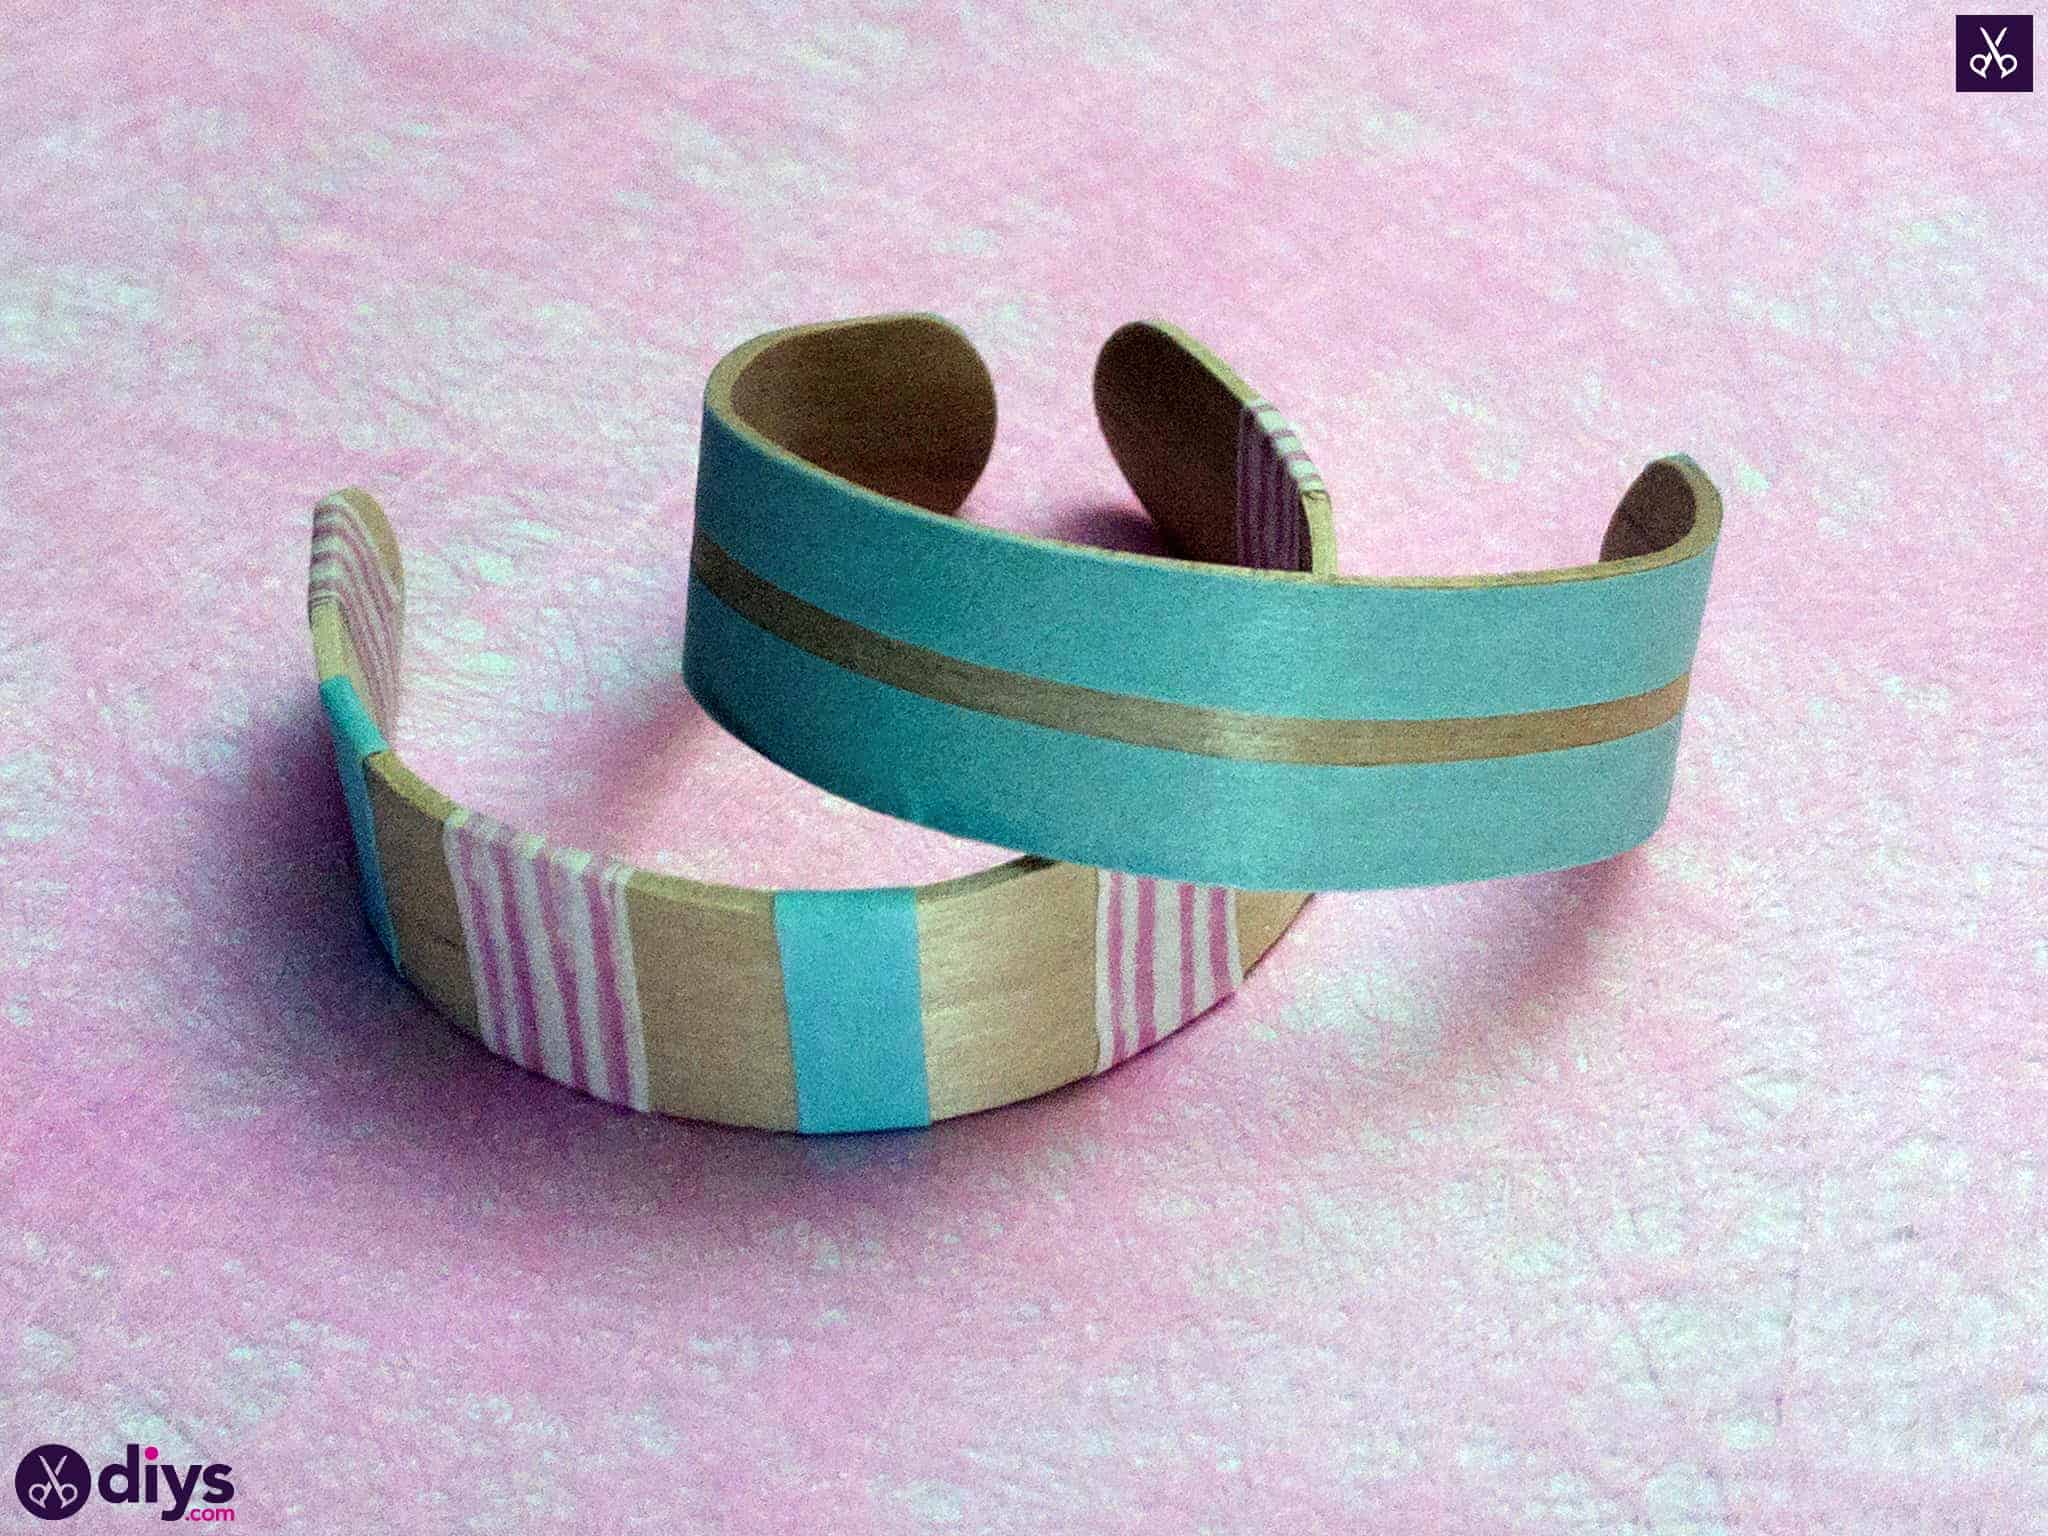 How to make a popsicle stick bracelet